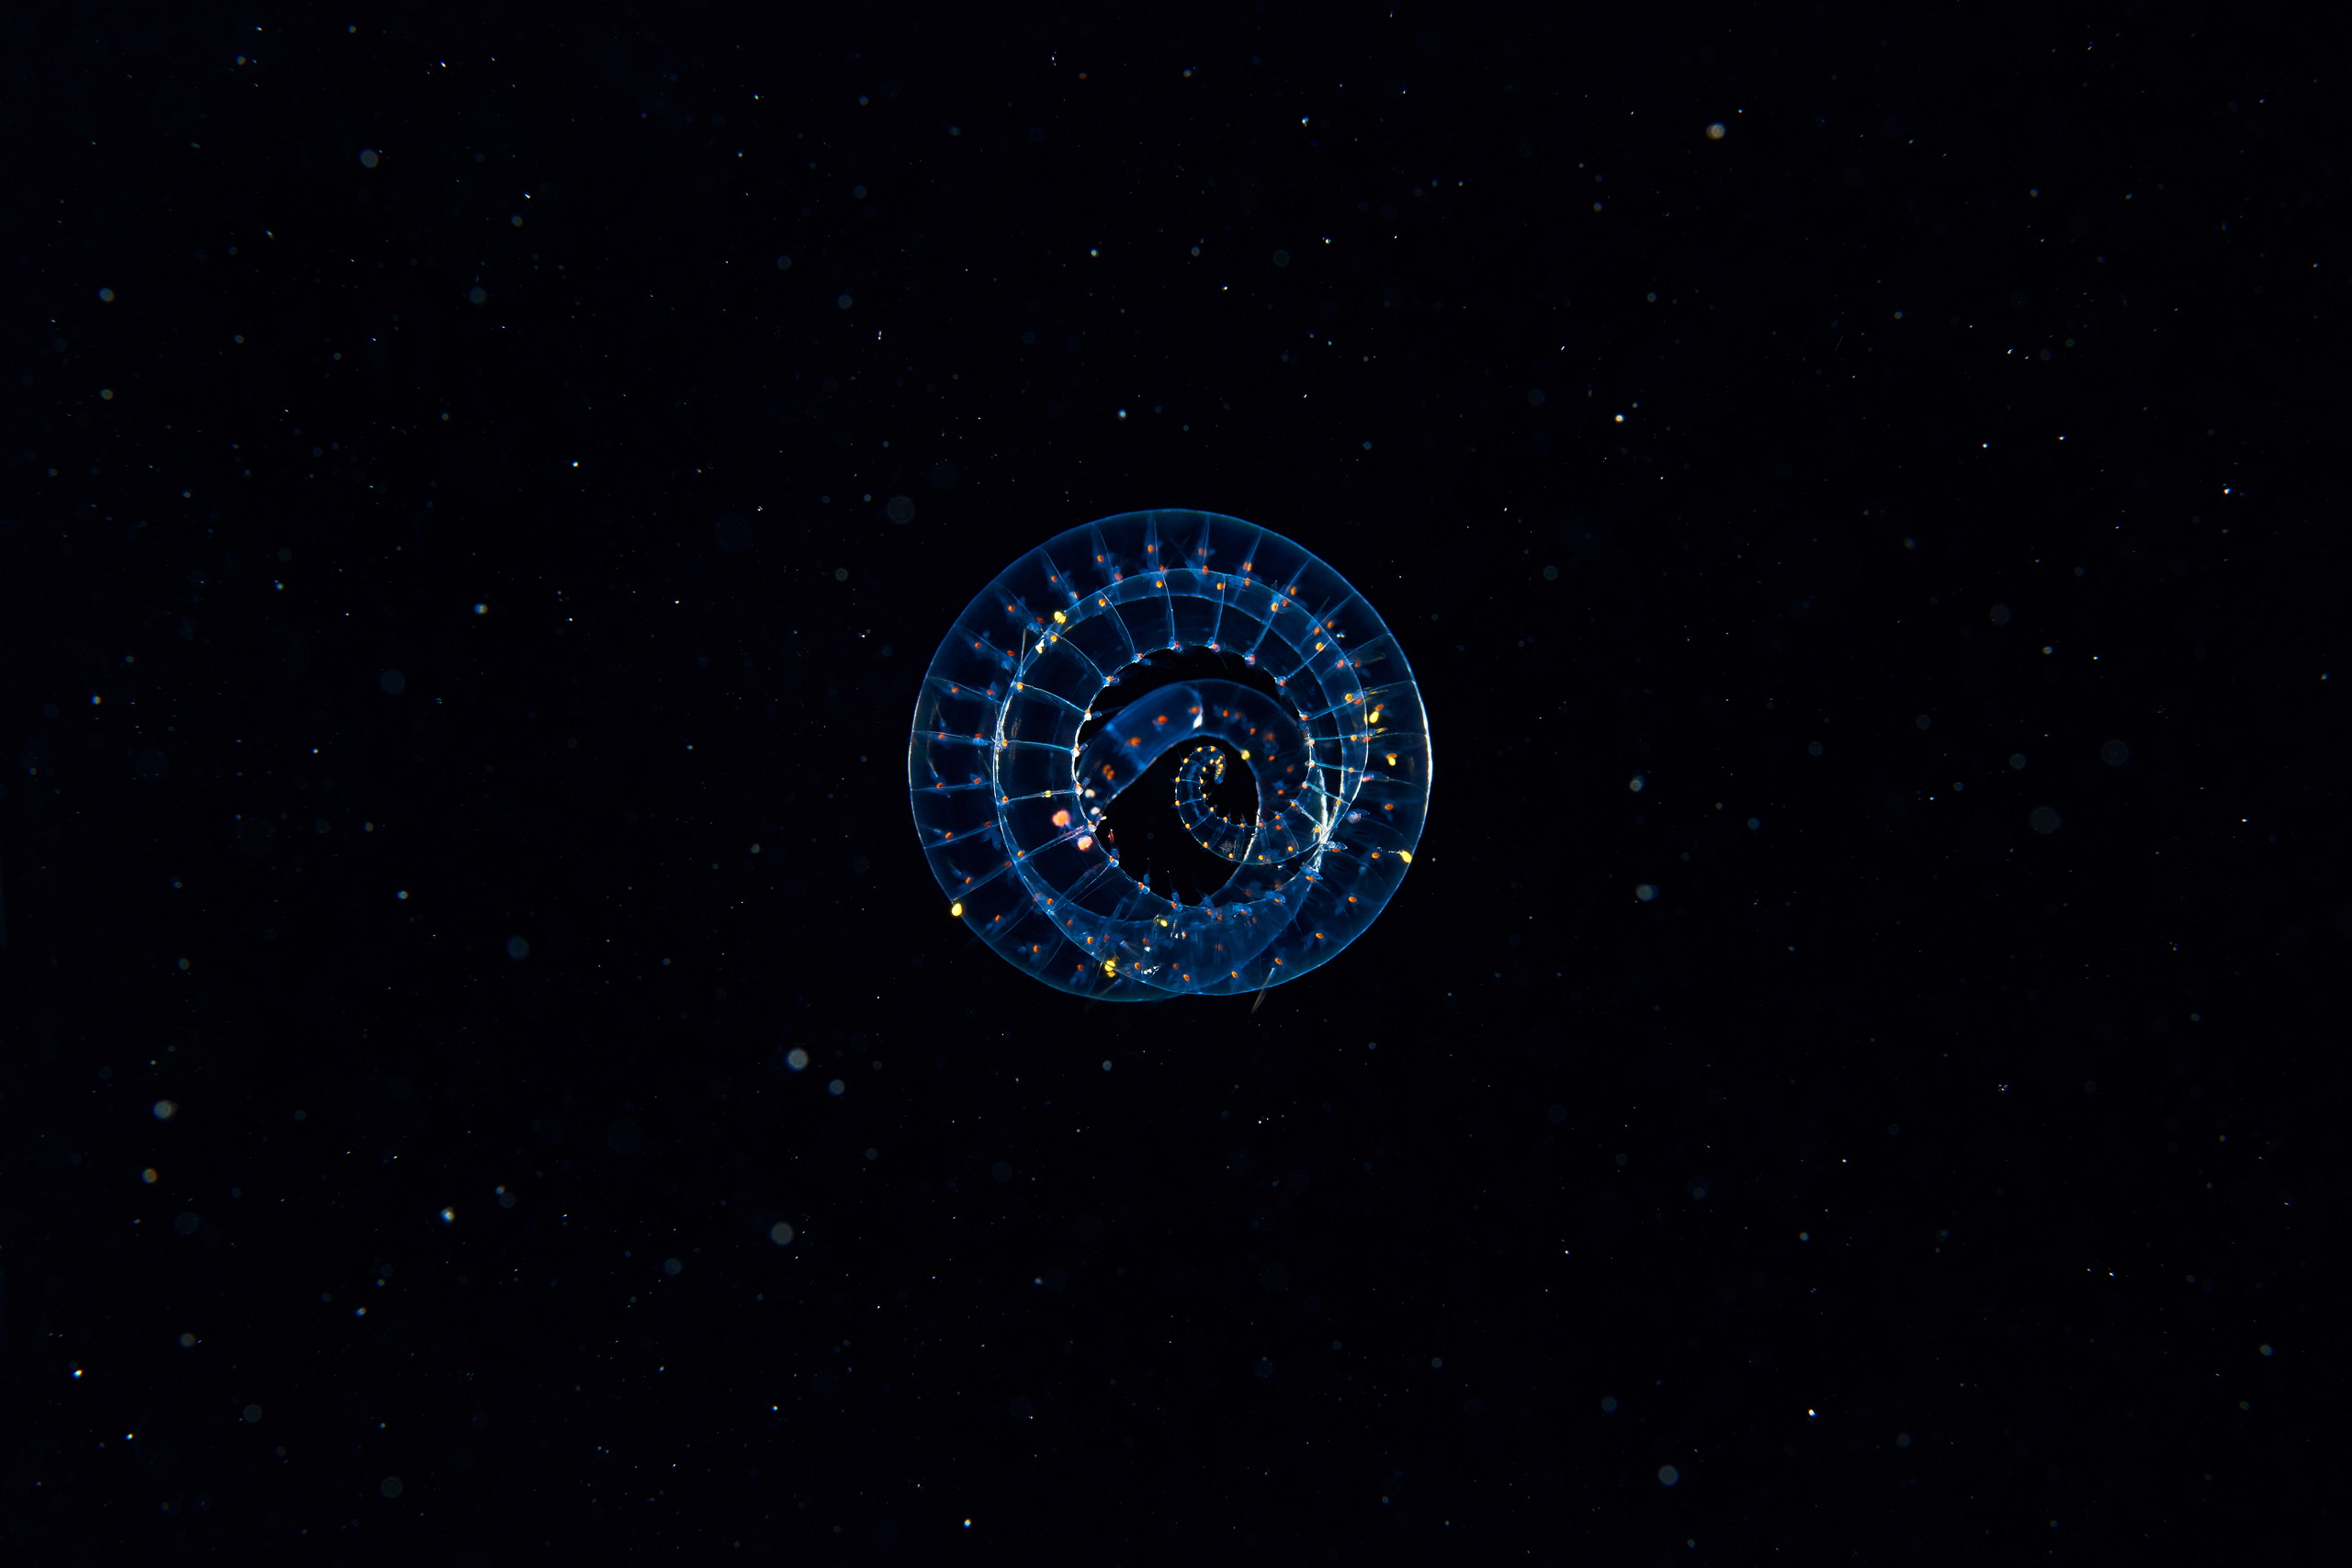 Polychaeta – Transparent planktonic polychaete